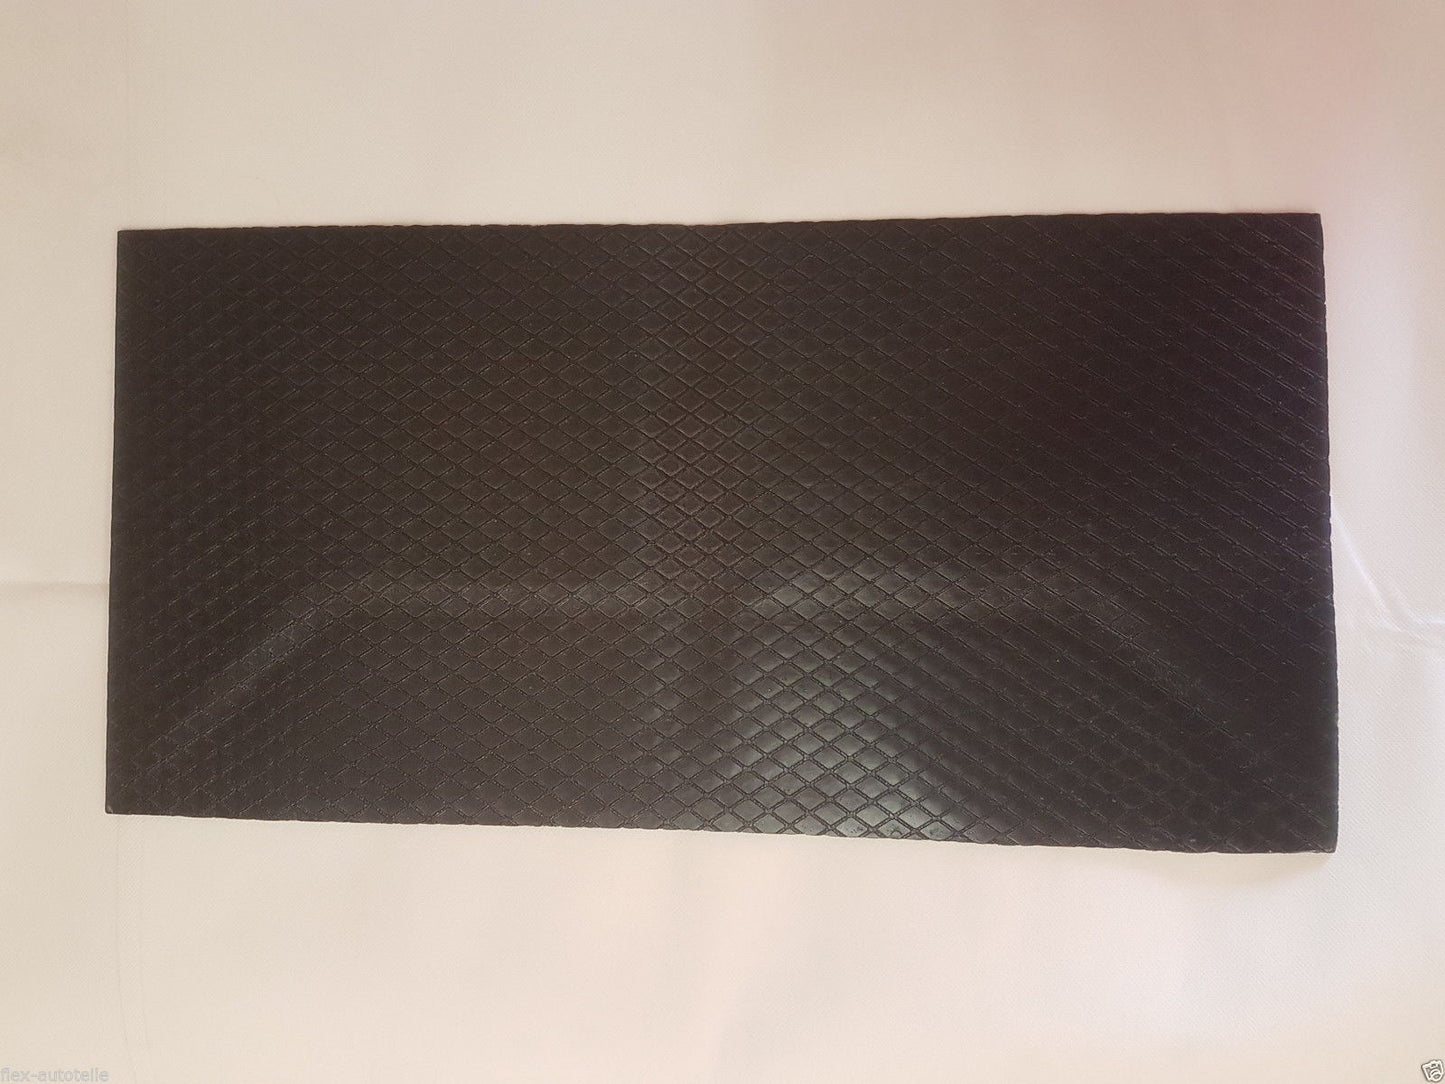 20x anti-drumming plate insulating mat self-adhesive car door insulation car 50 x 25 cm